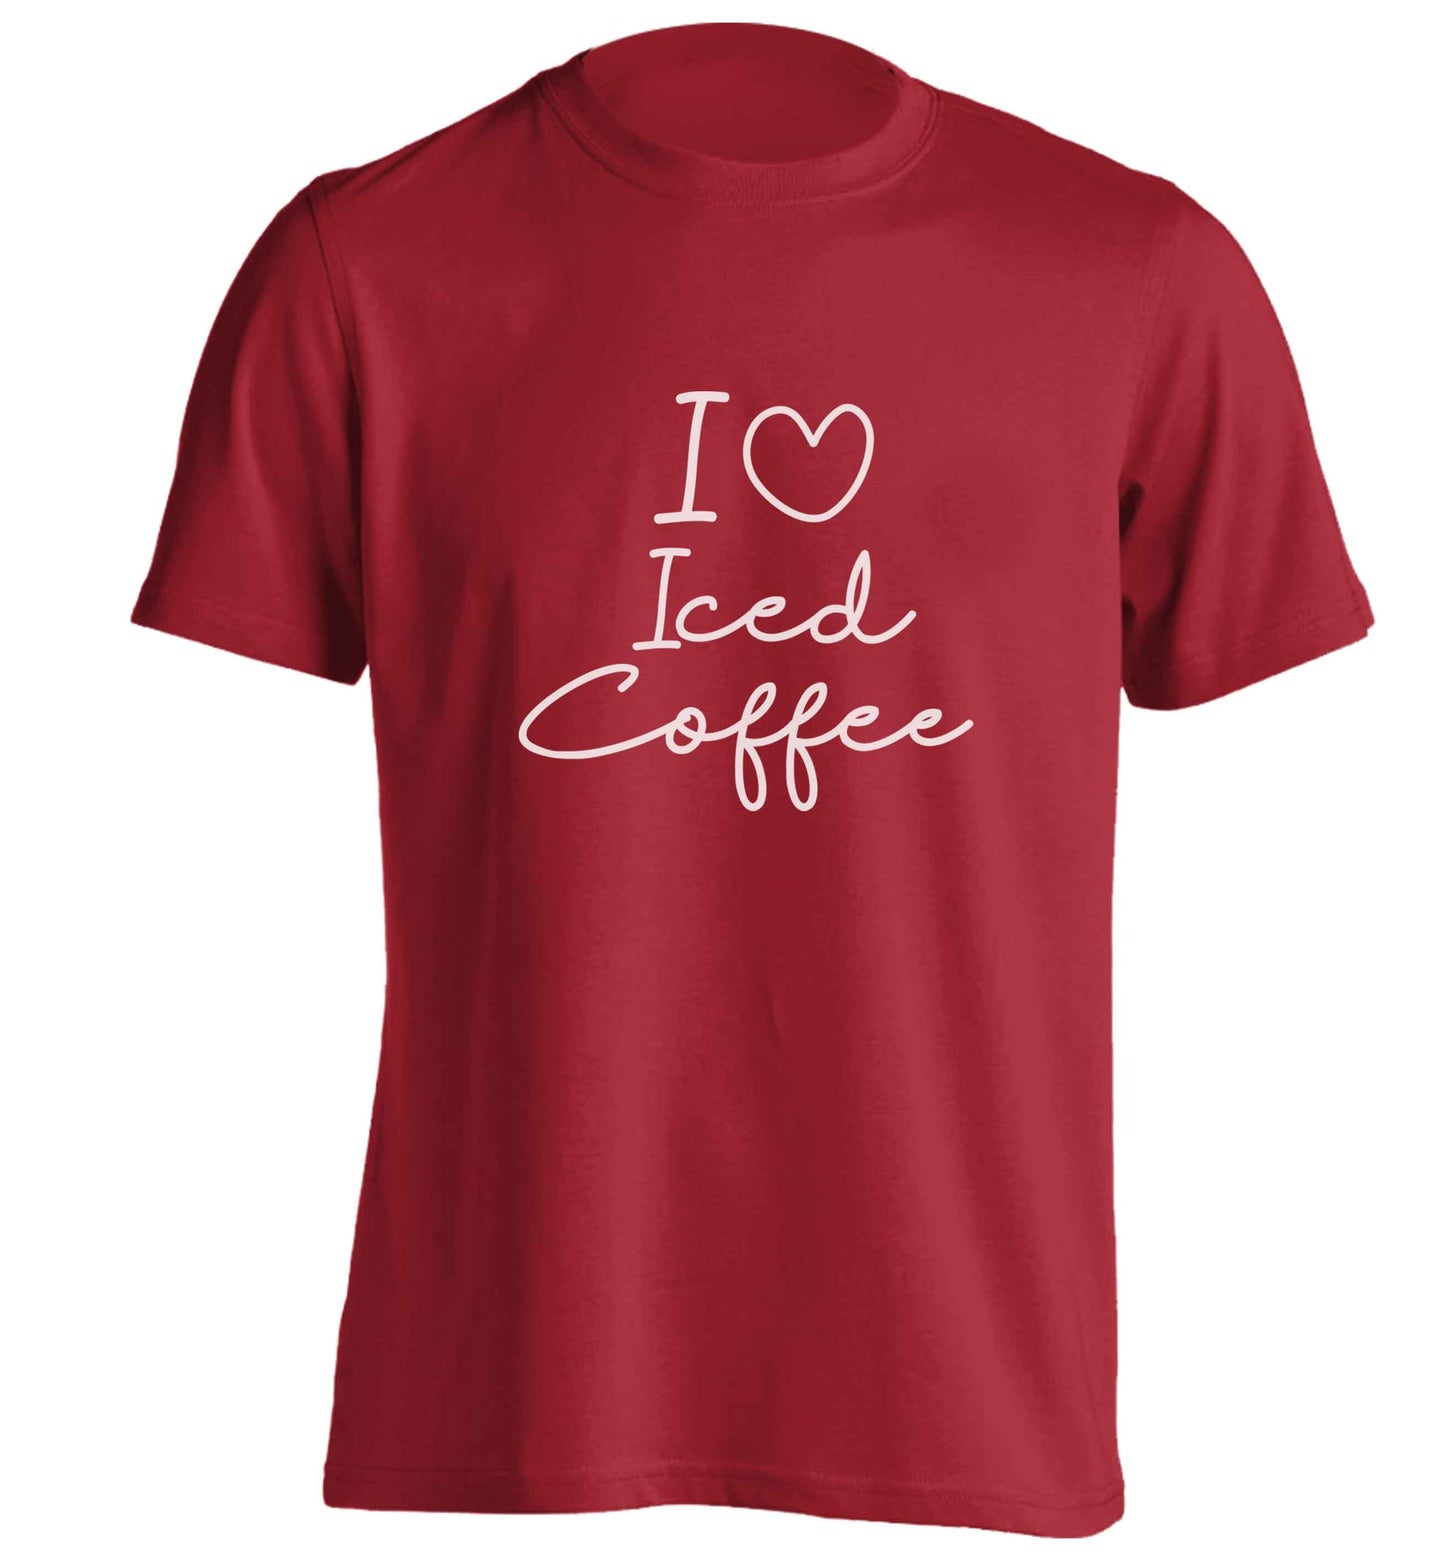 I love iced coffee adults unisex red Tshirt 2XL